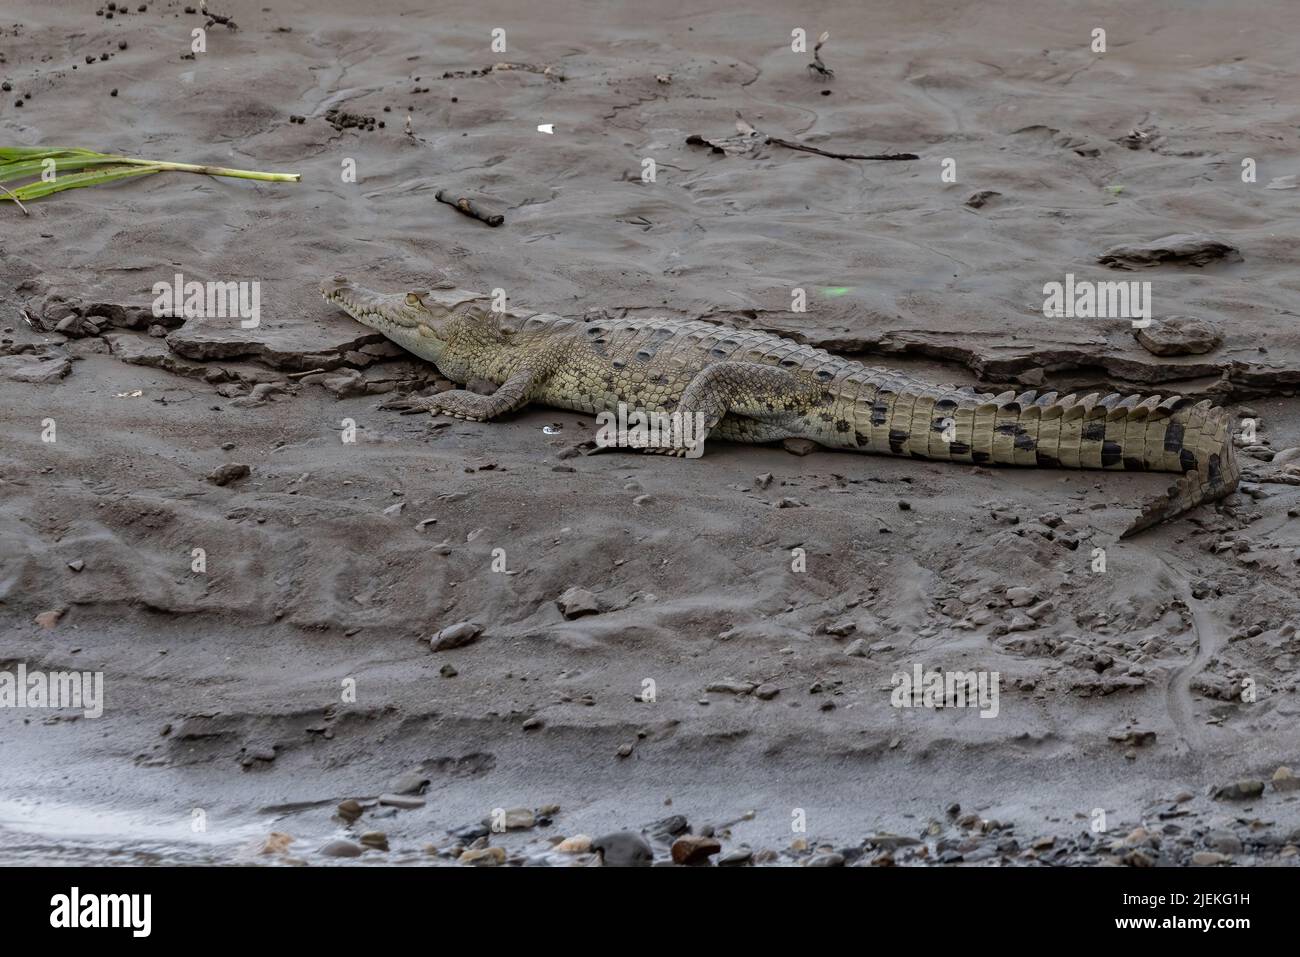 Crocodile getting sun in Costa Rica. Stock Photo